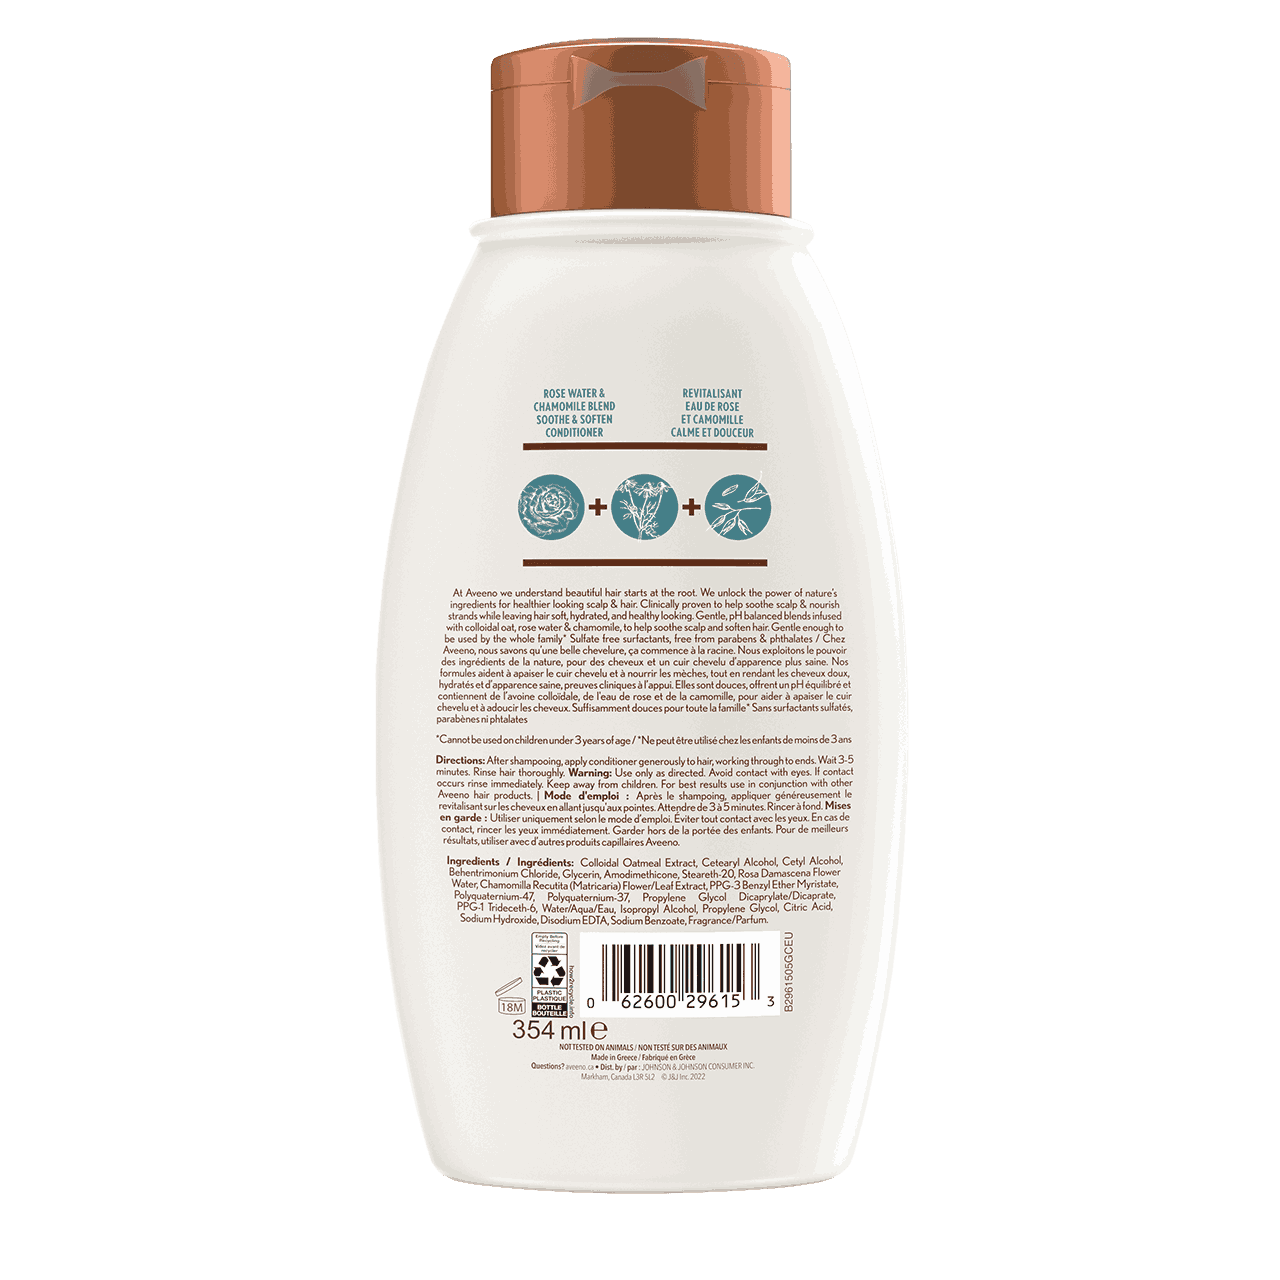 AVEENO® Rose Water & Chamomile Blend Conditioner, 354ml bottle, back label